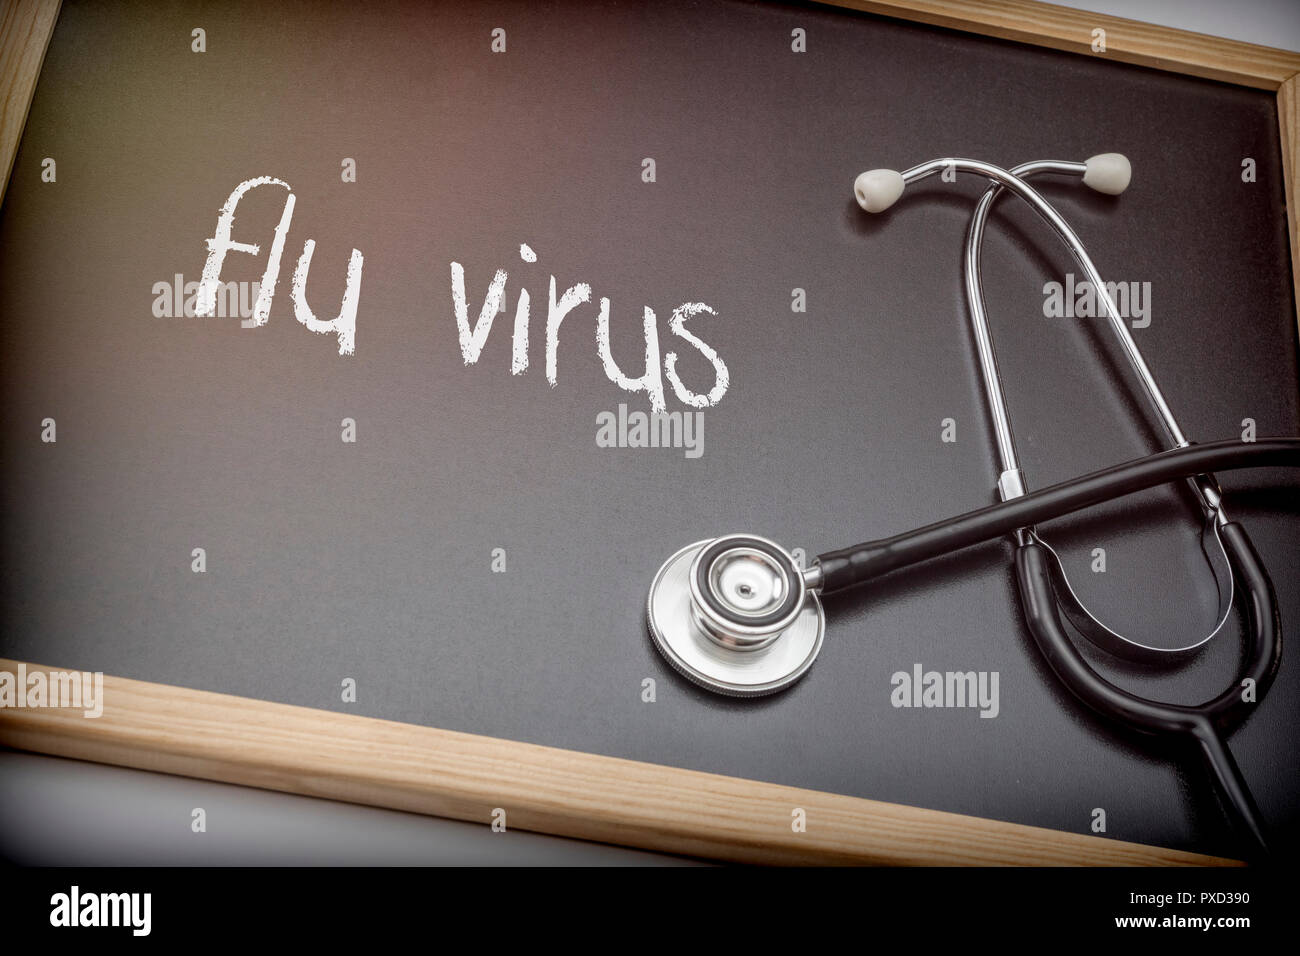 Word flu viris written in chalk on a blackboard black next to a stethoscope, conceptual image Stock Photo